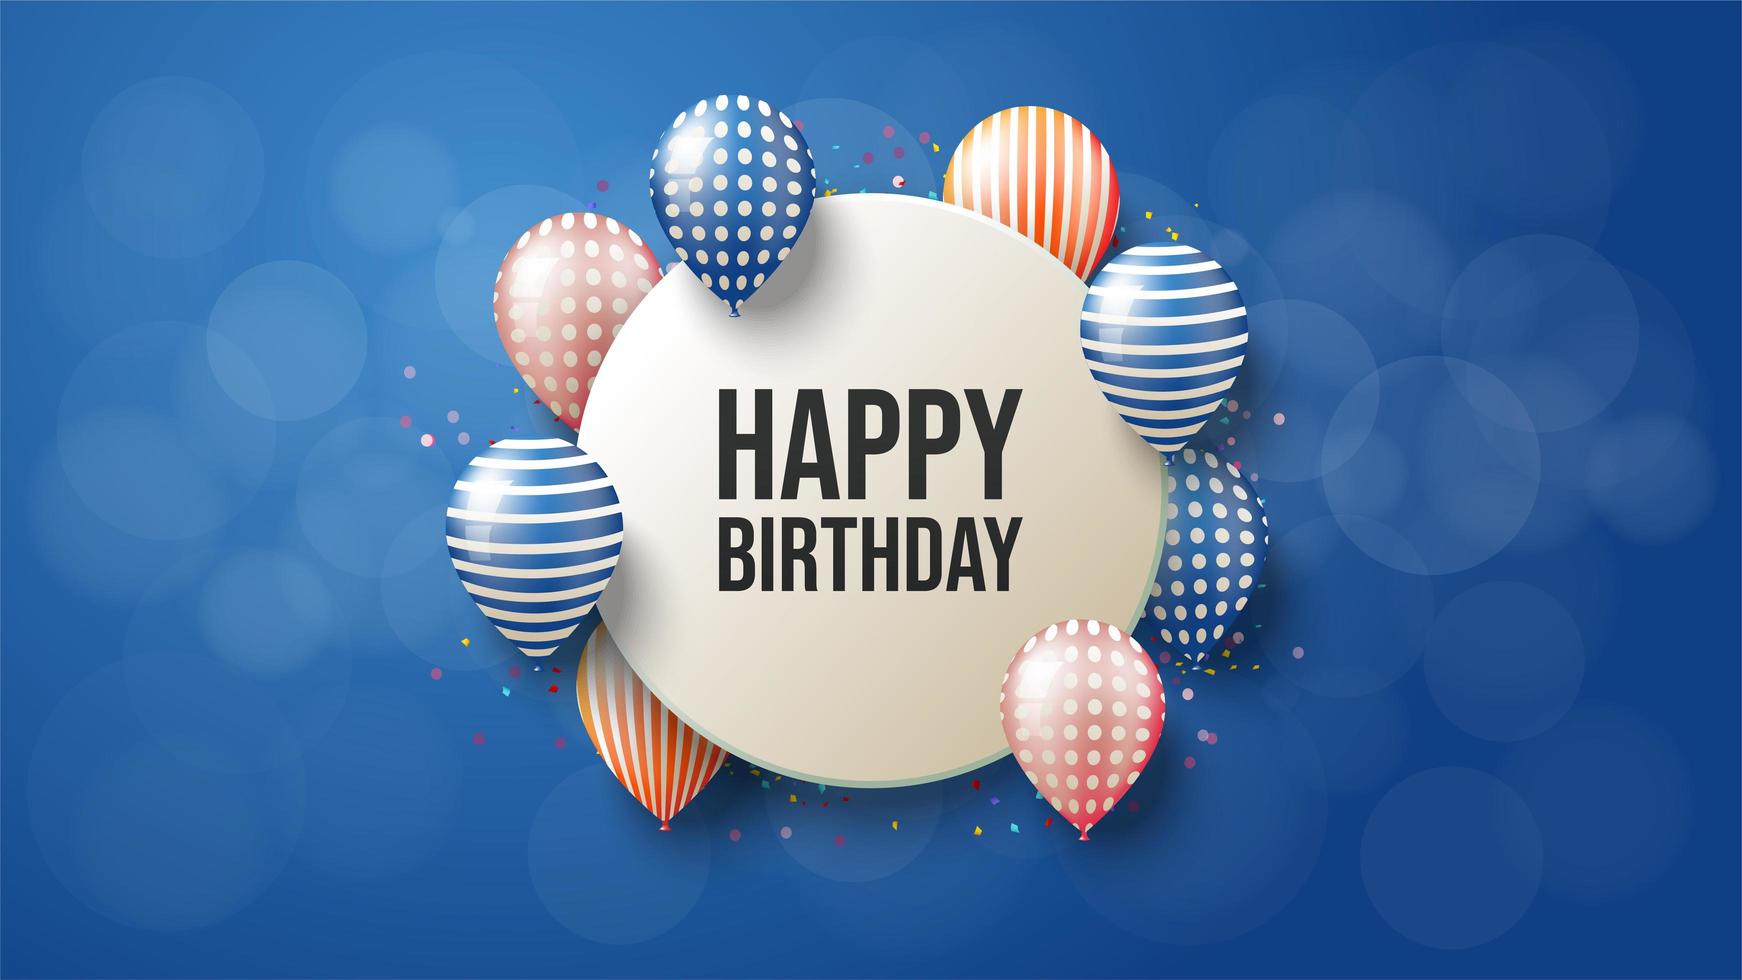 Download Circular Happy Birthday background - Download Free Vectors, Clipart Graphics & Vector Art